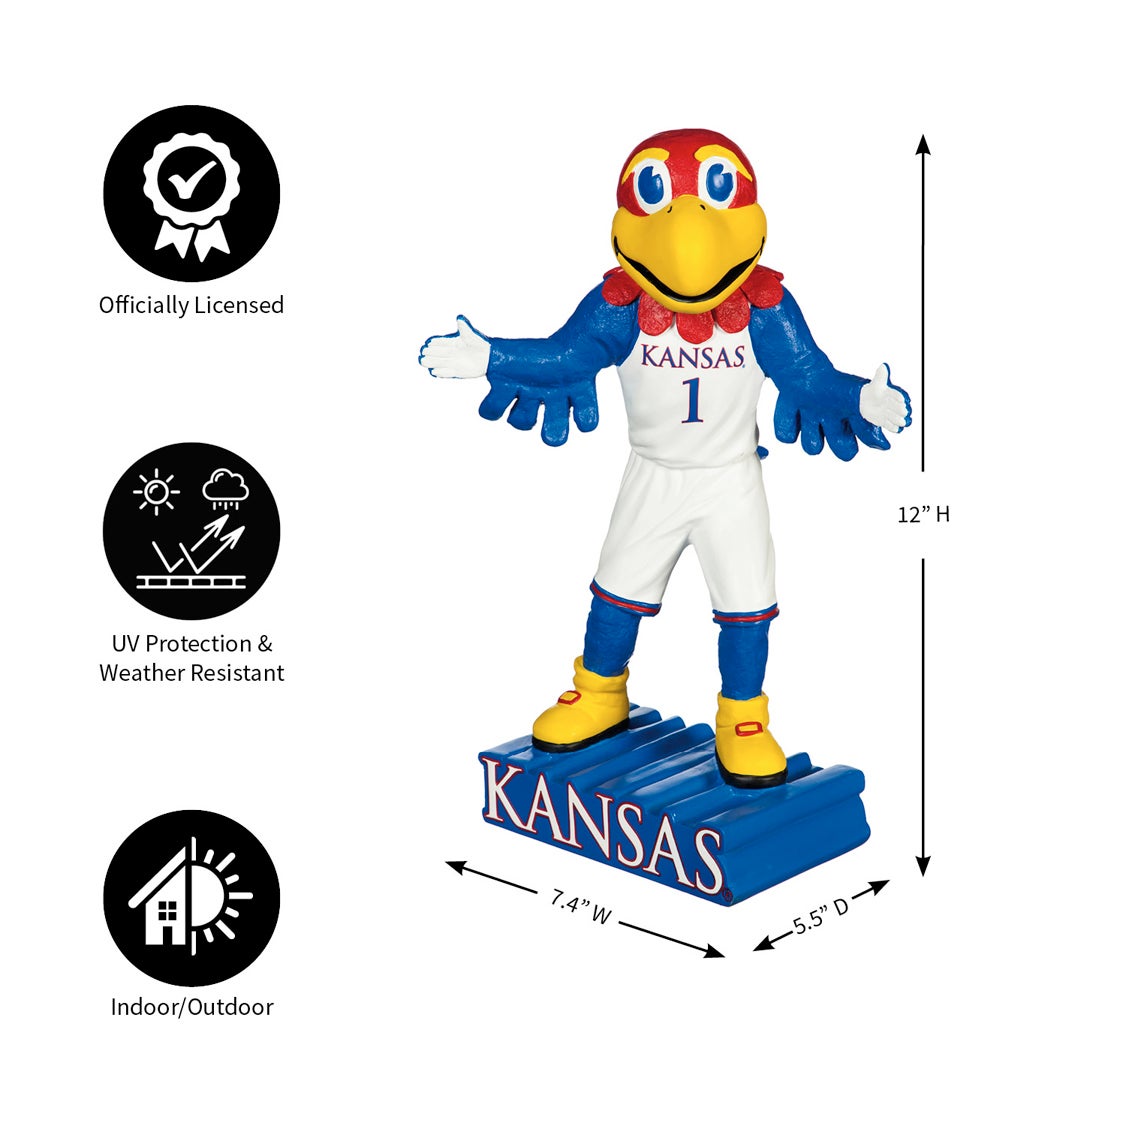 University of Kansas Mascot Statue